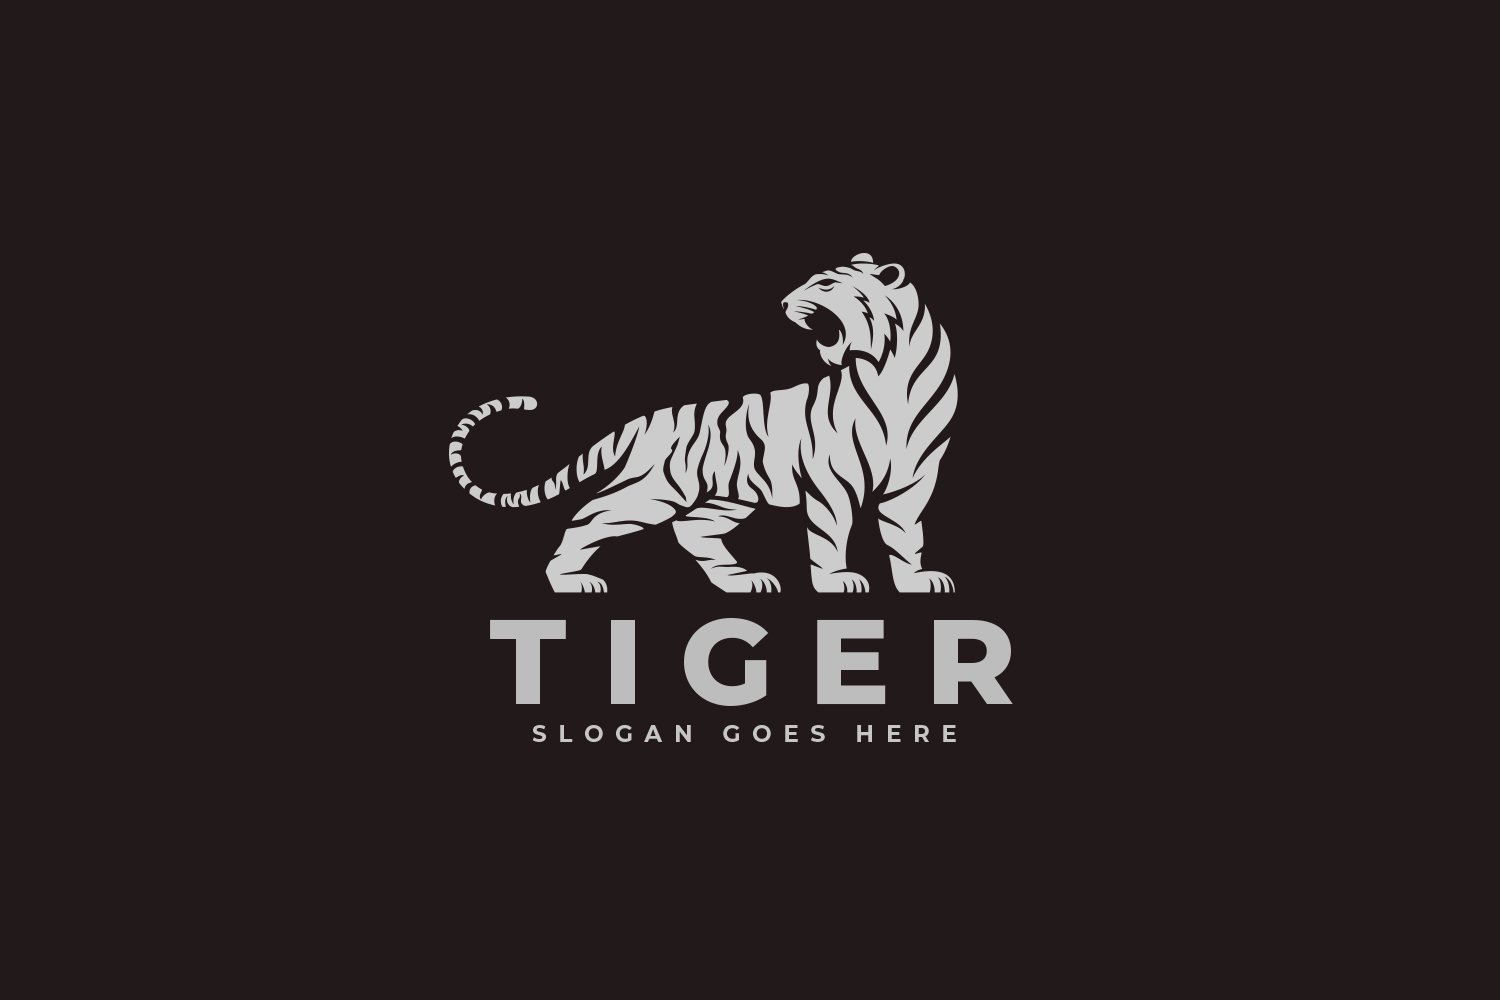 Tiger Mascot Logo Design cover image.